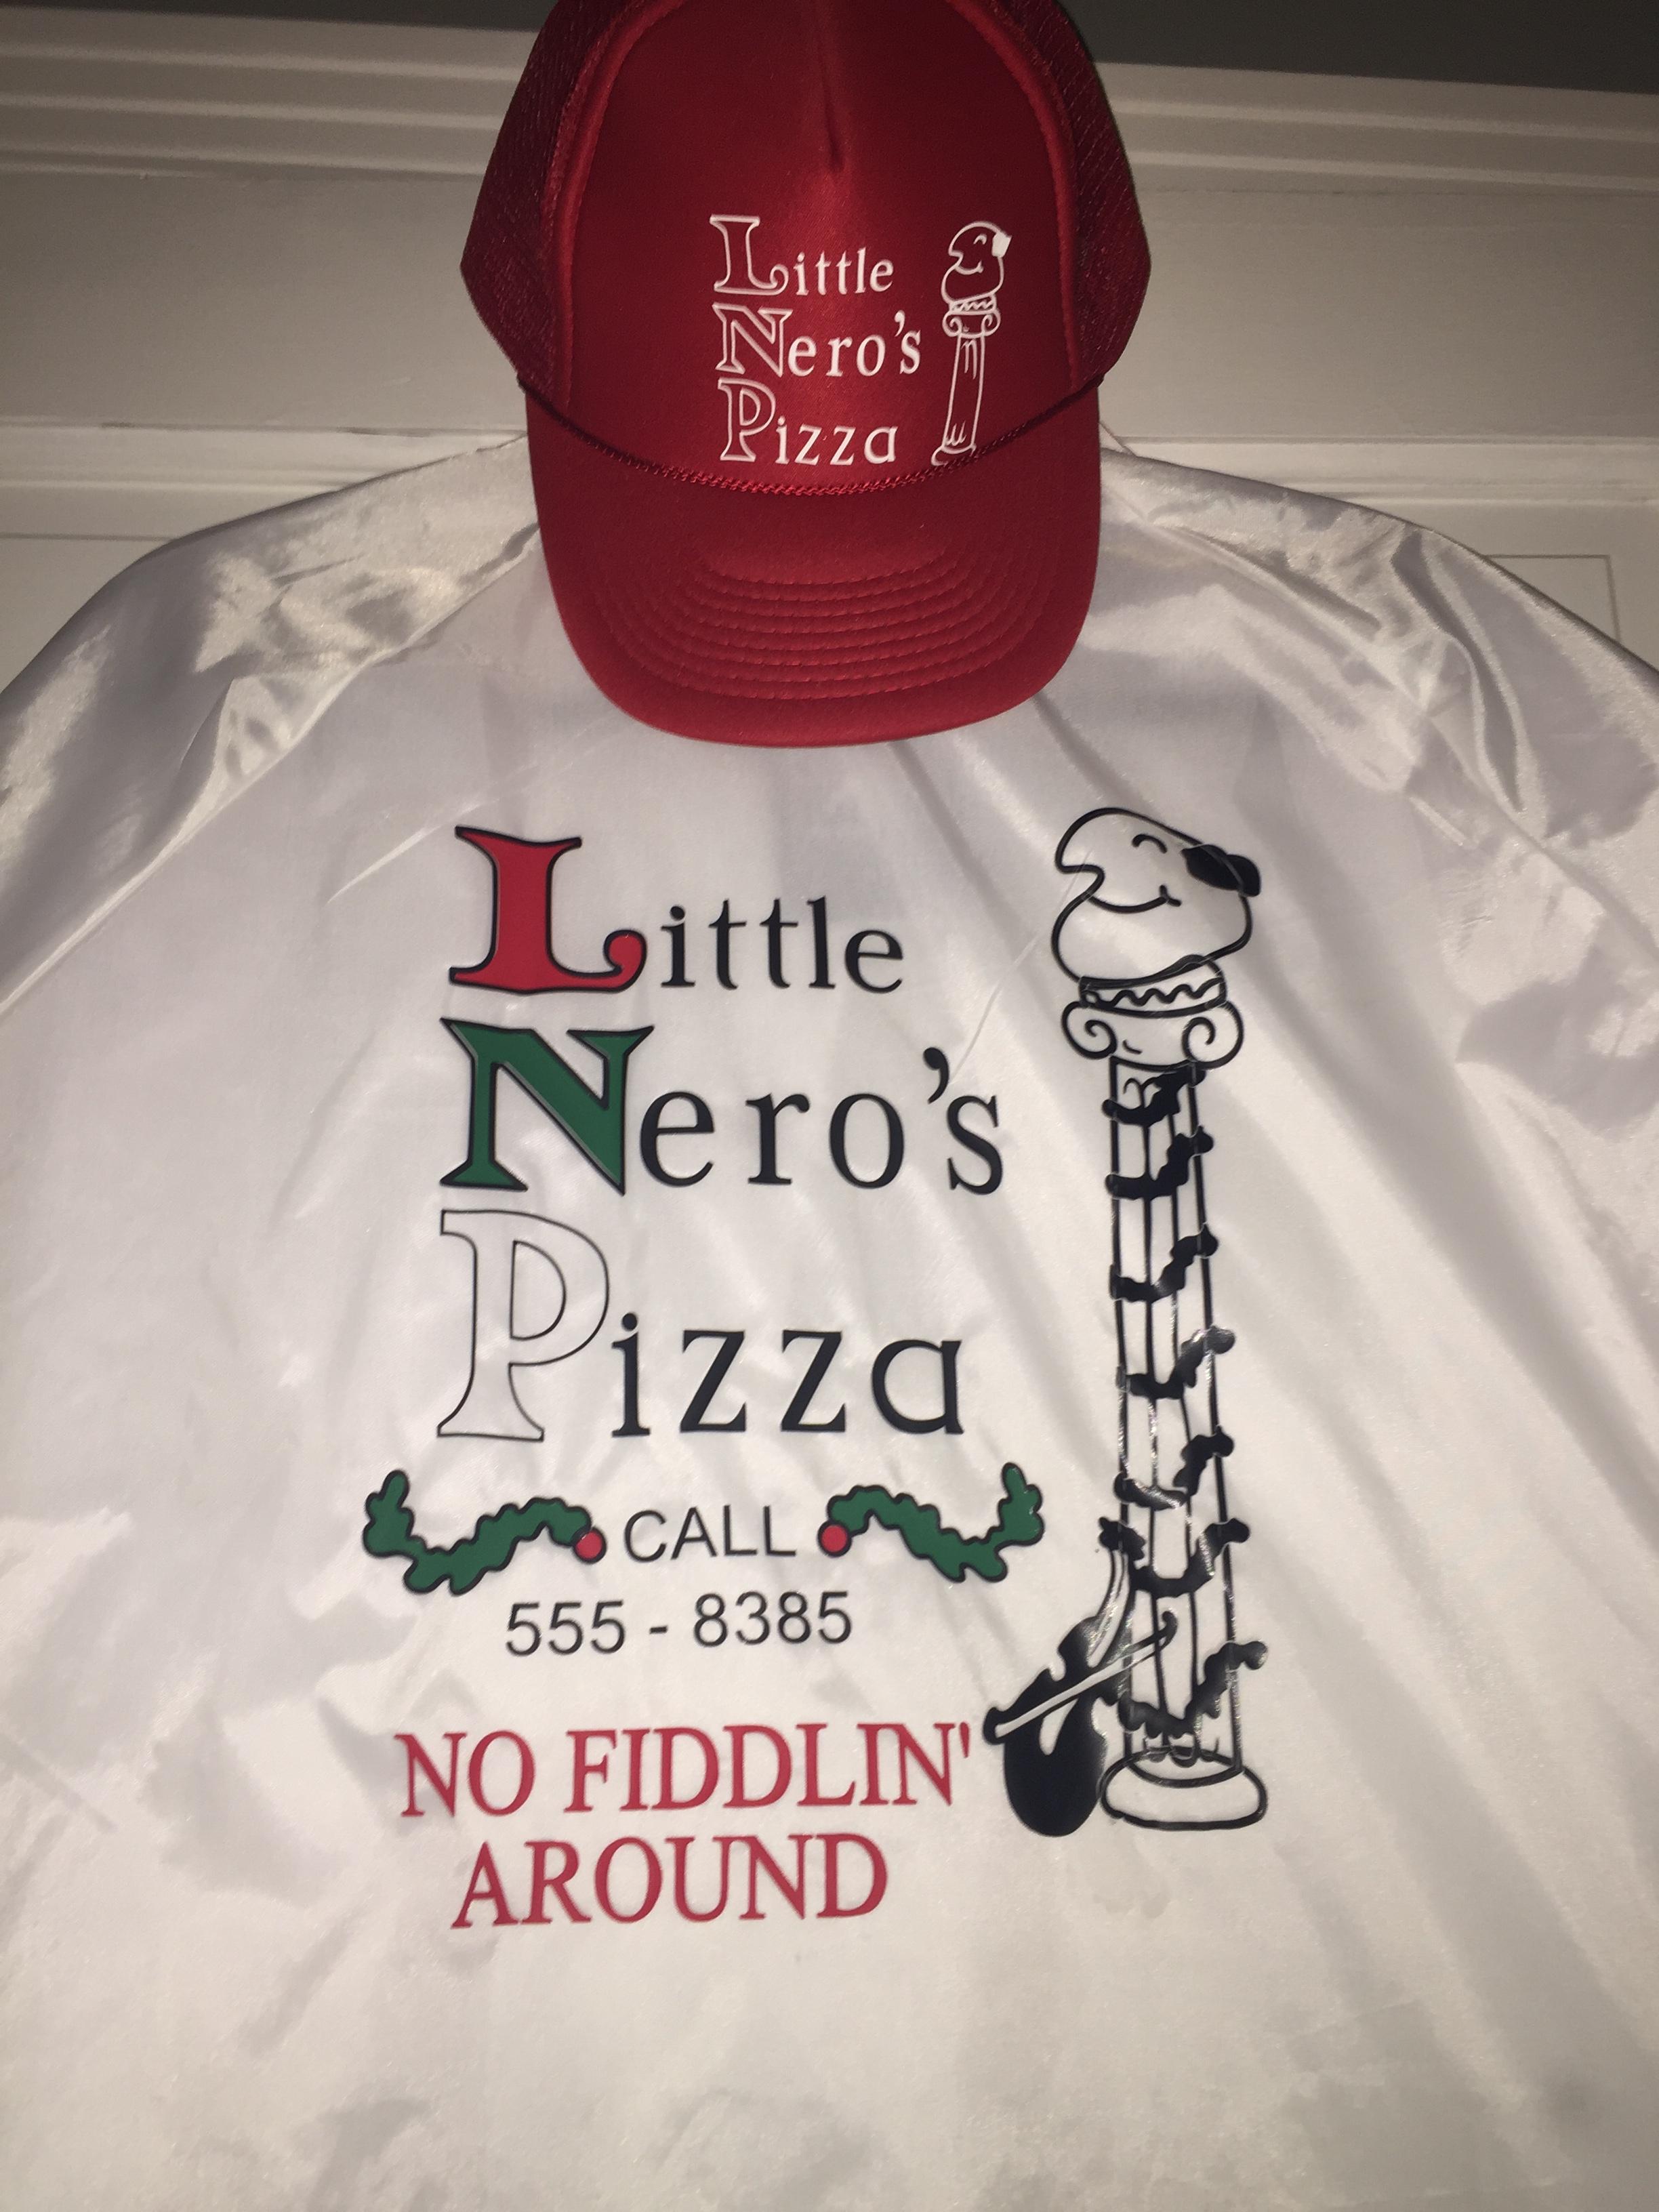 Home Alone Fans Recreate The Little Nero's Pizza Car